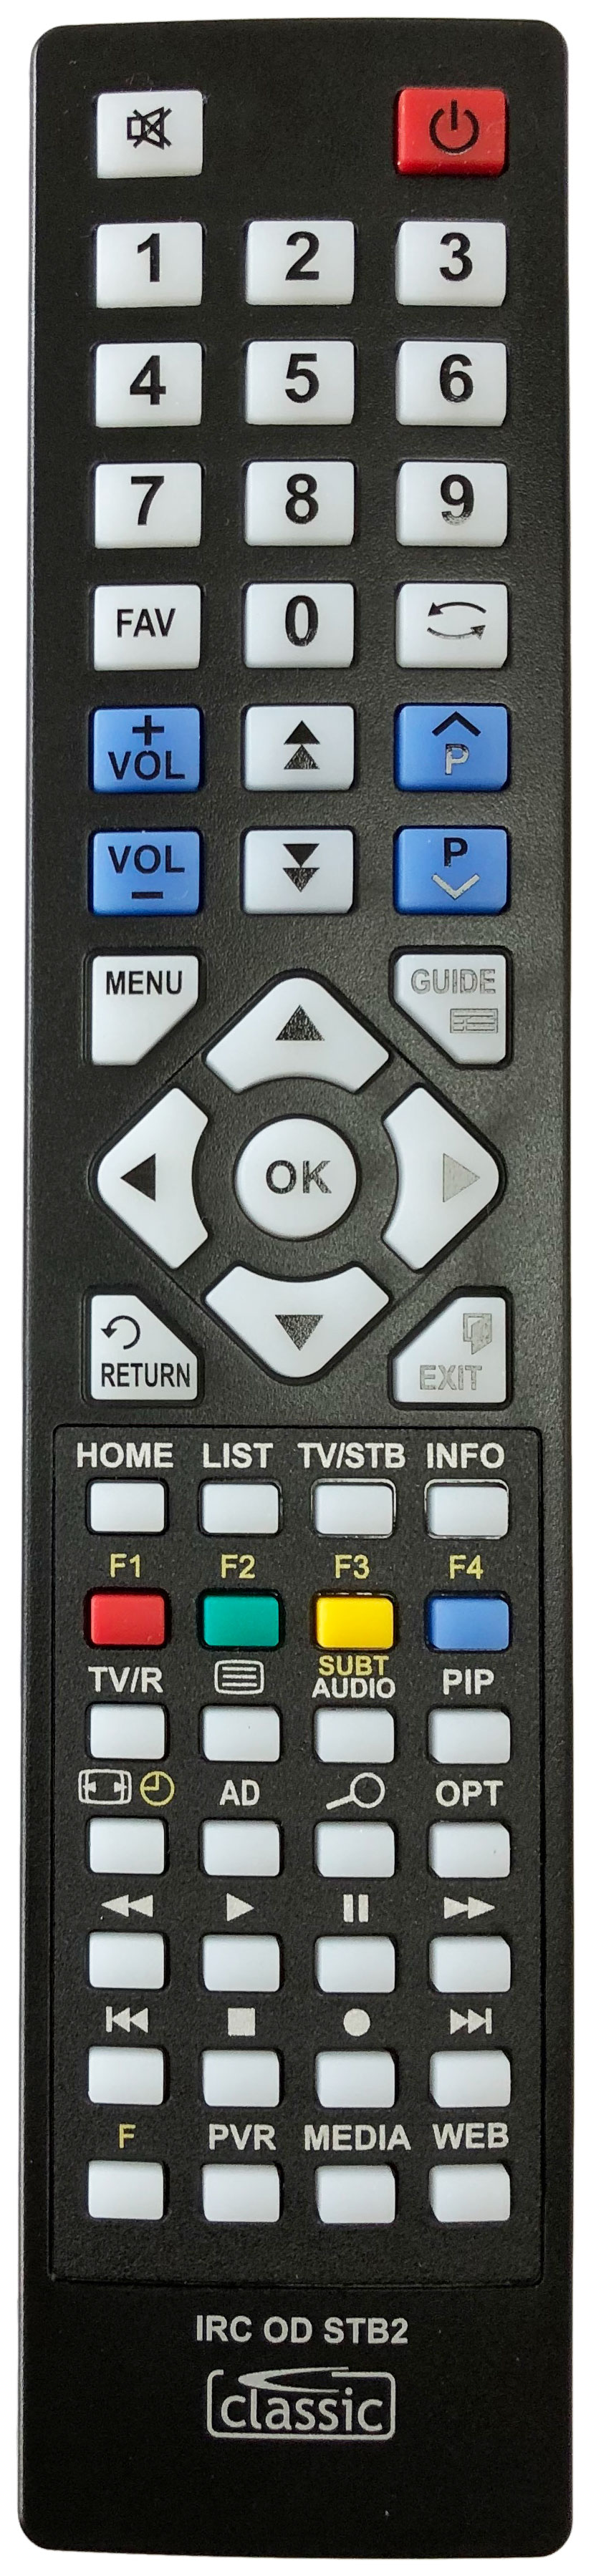 AKURA AMTDT3509-250 Remote Control